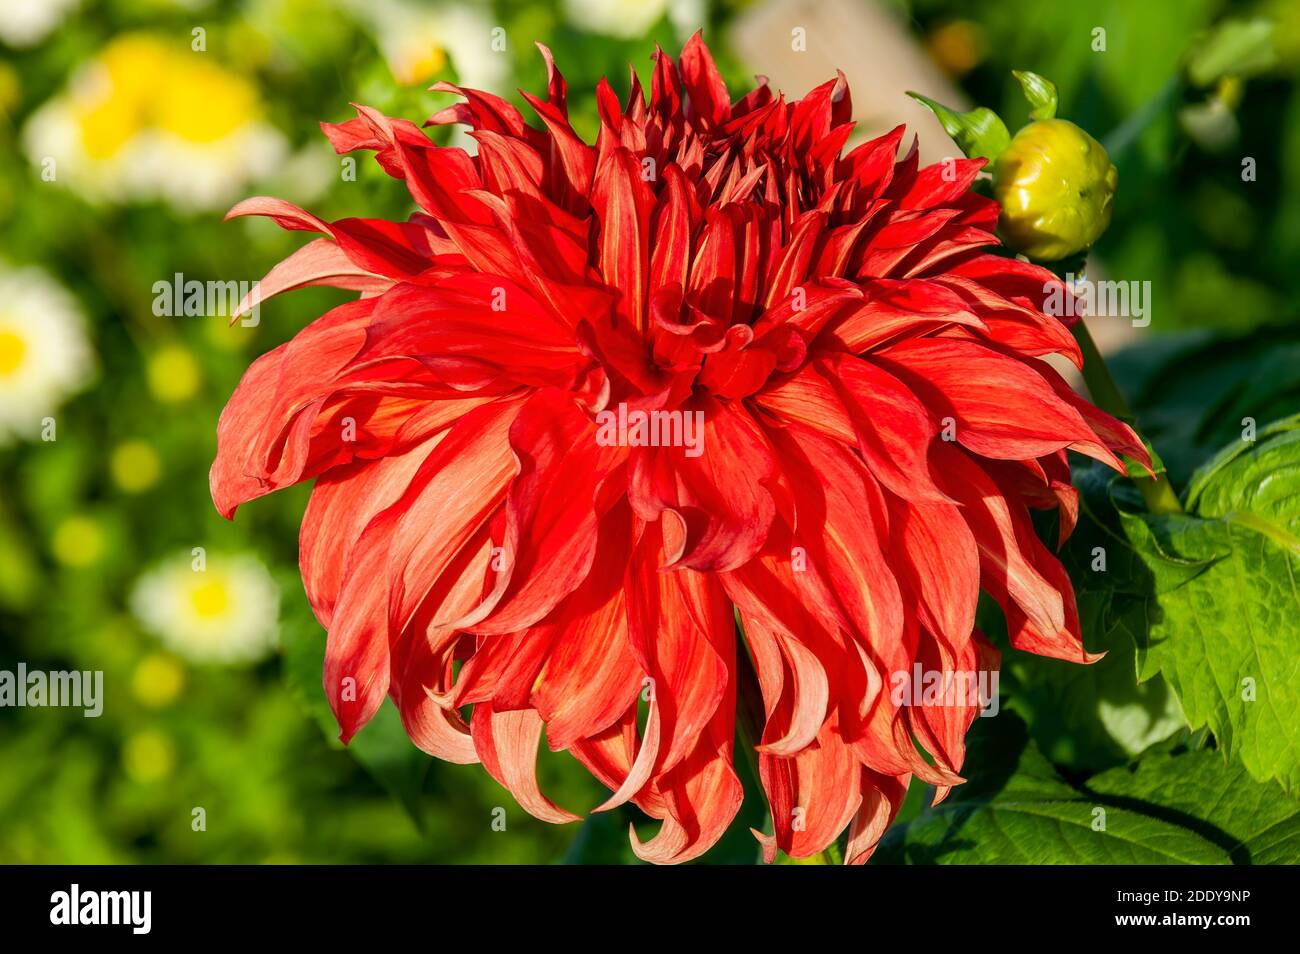 Dahlia 'Bryn Terfel' a red summer autumn semi cactus flower tuber plant, stock photo image Stock Photo